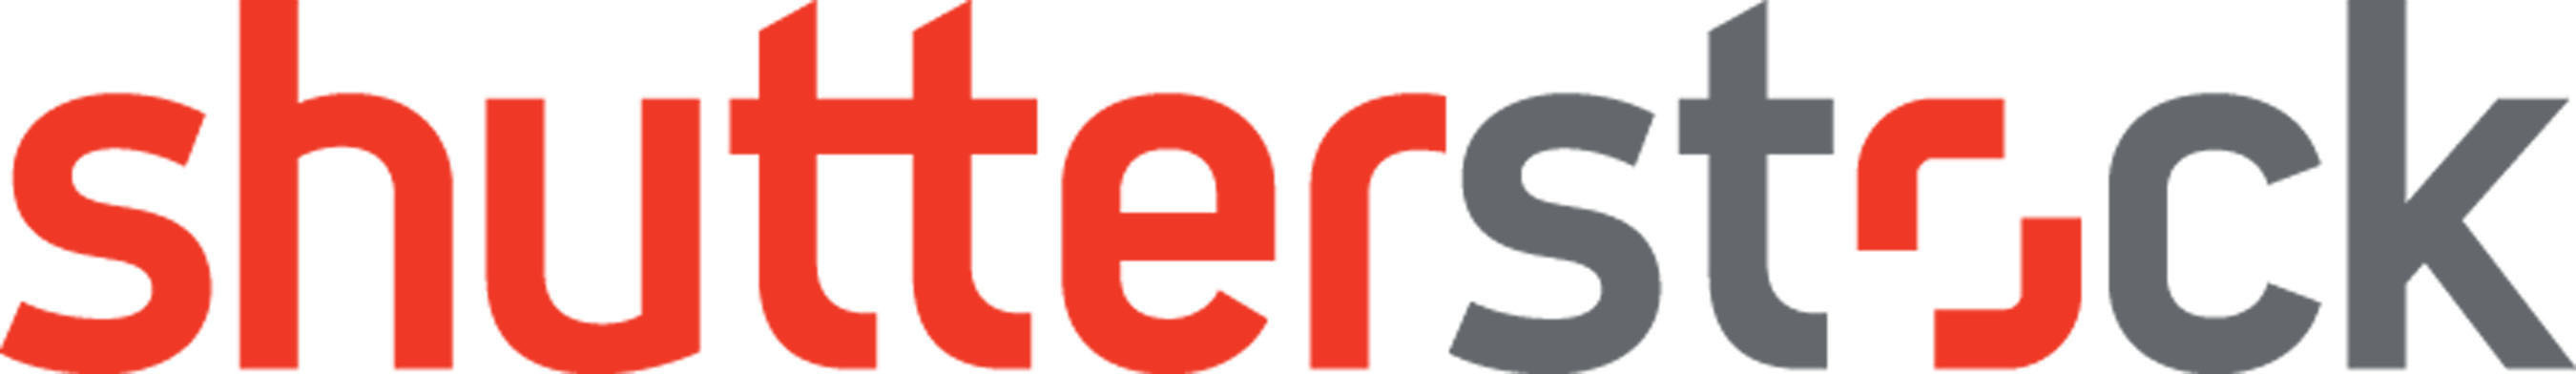 Shutterstock Logo. (PRNewsFoto/Shutterstock) (PRNewsFoto/Shutterstock, Inc.)